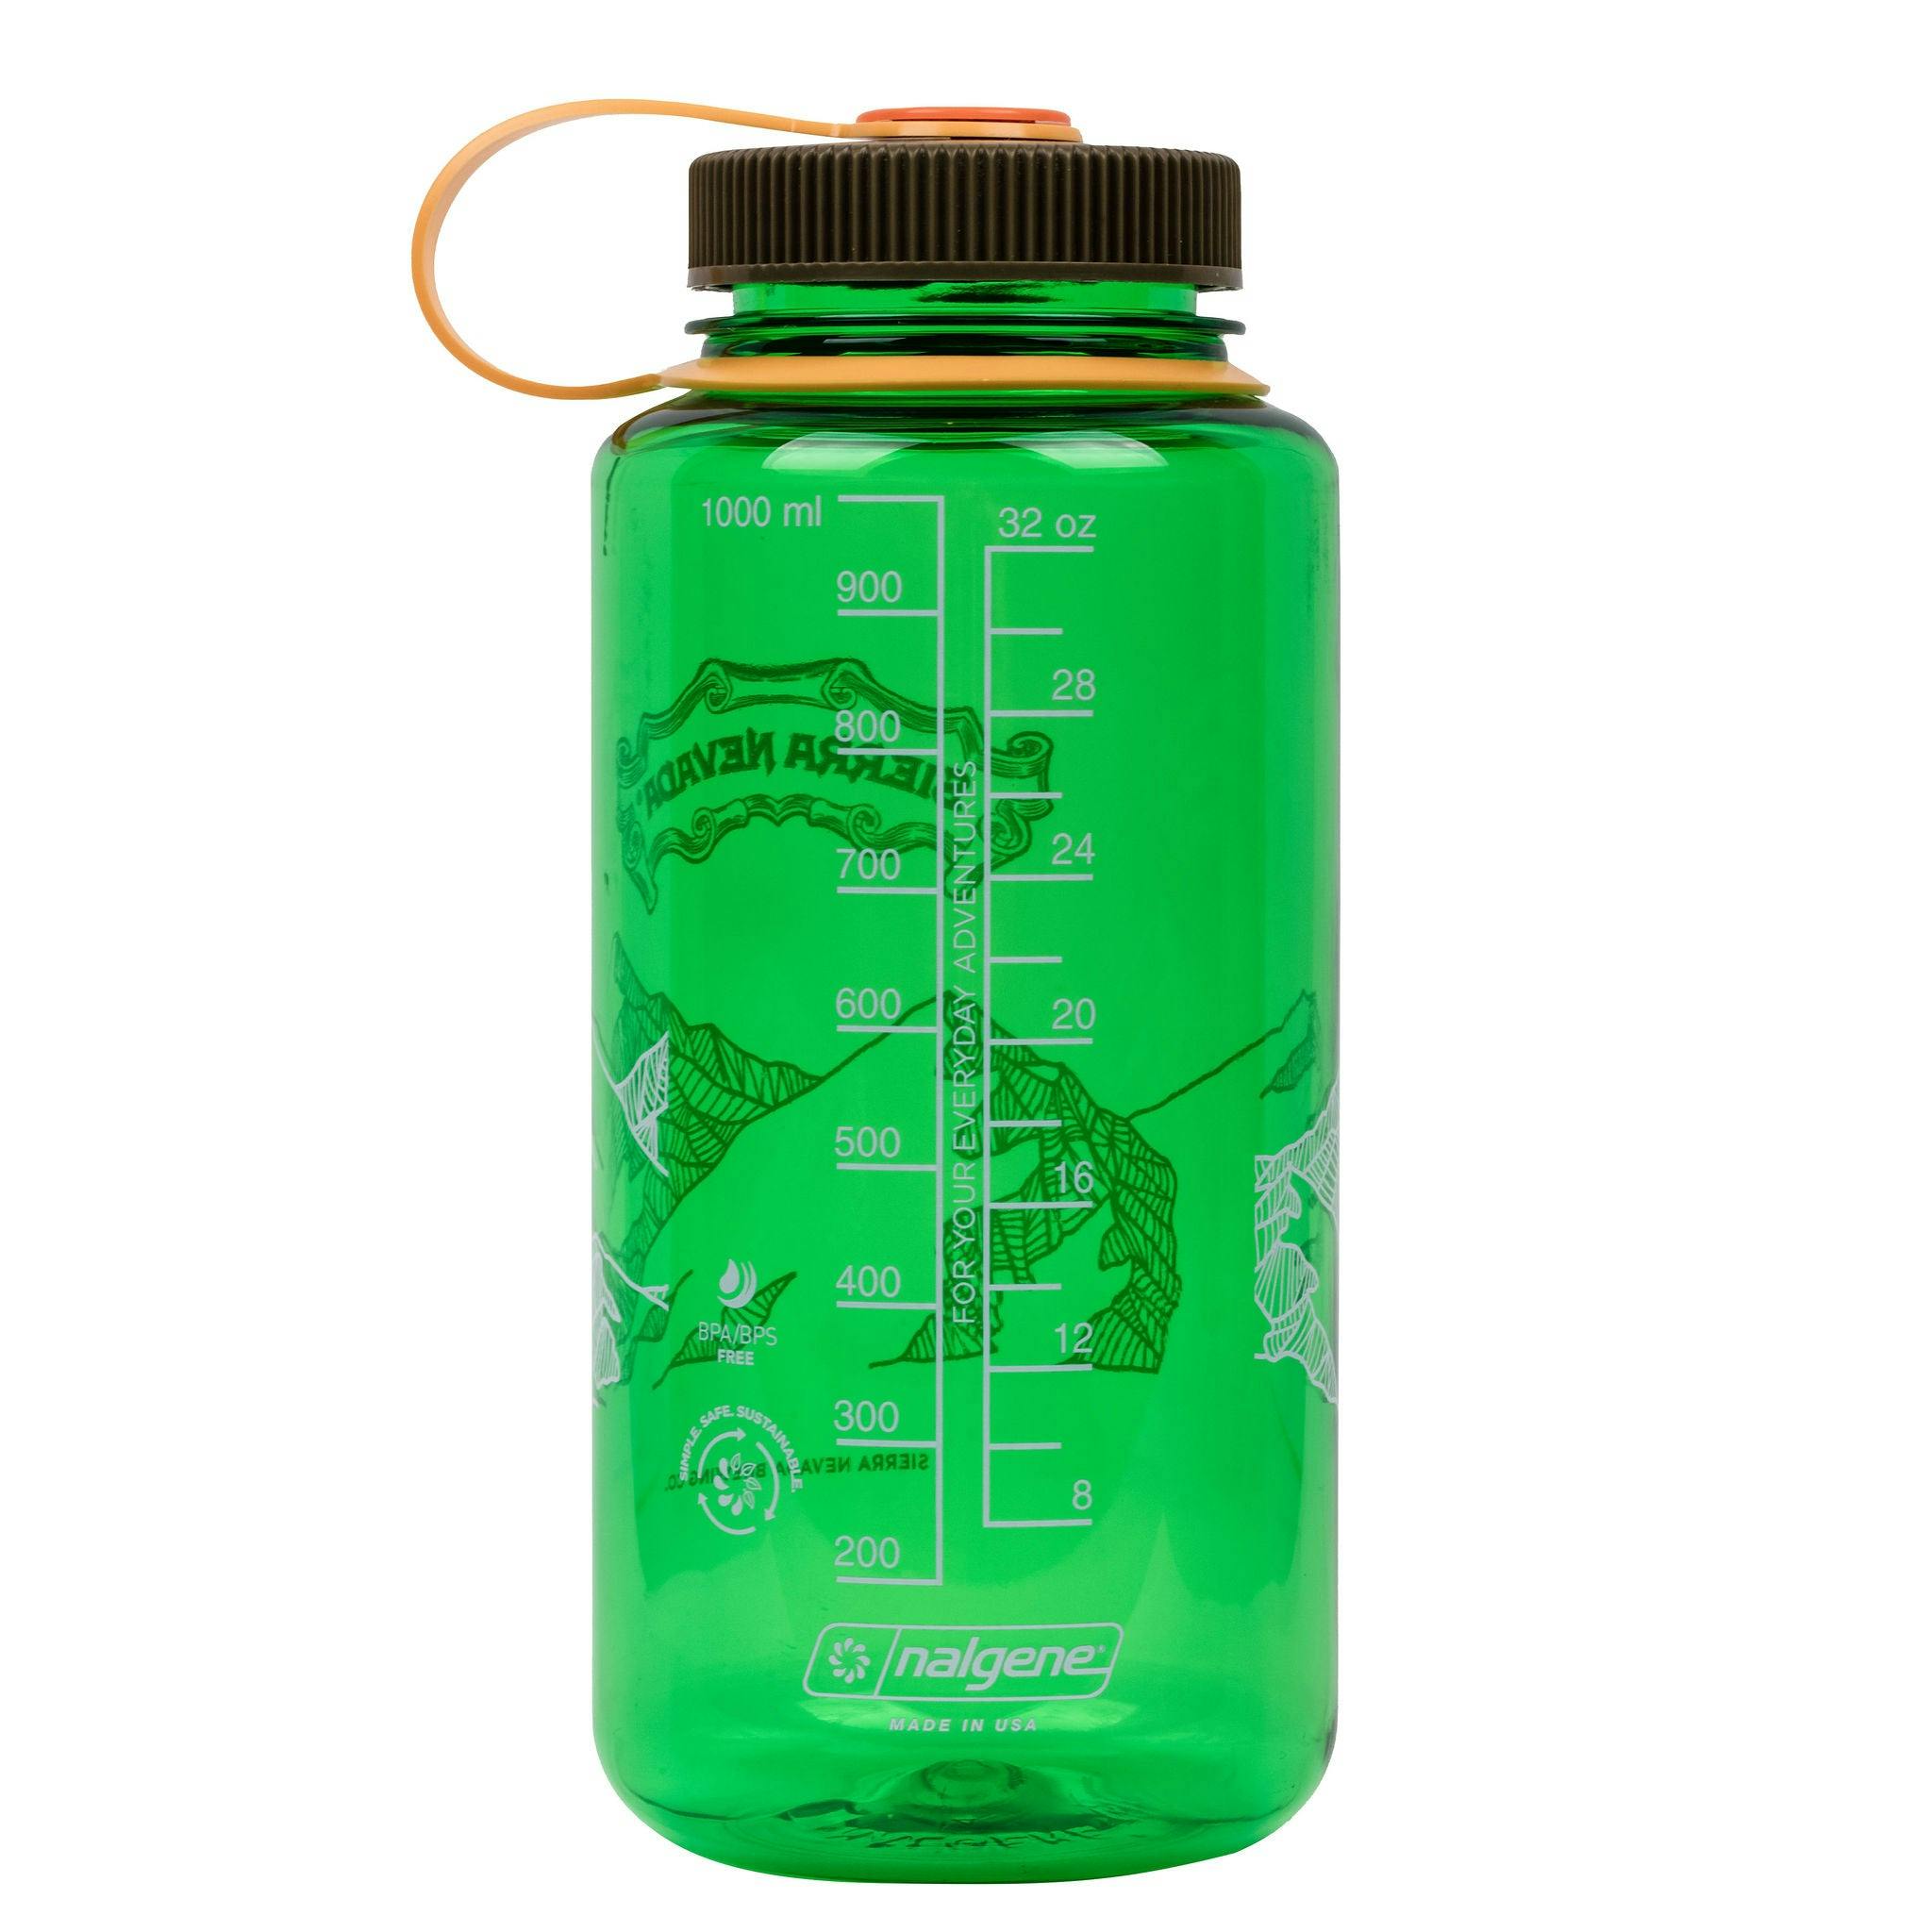 Nalgene 32oz green water bottle featuring mountain peak design